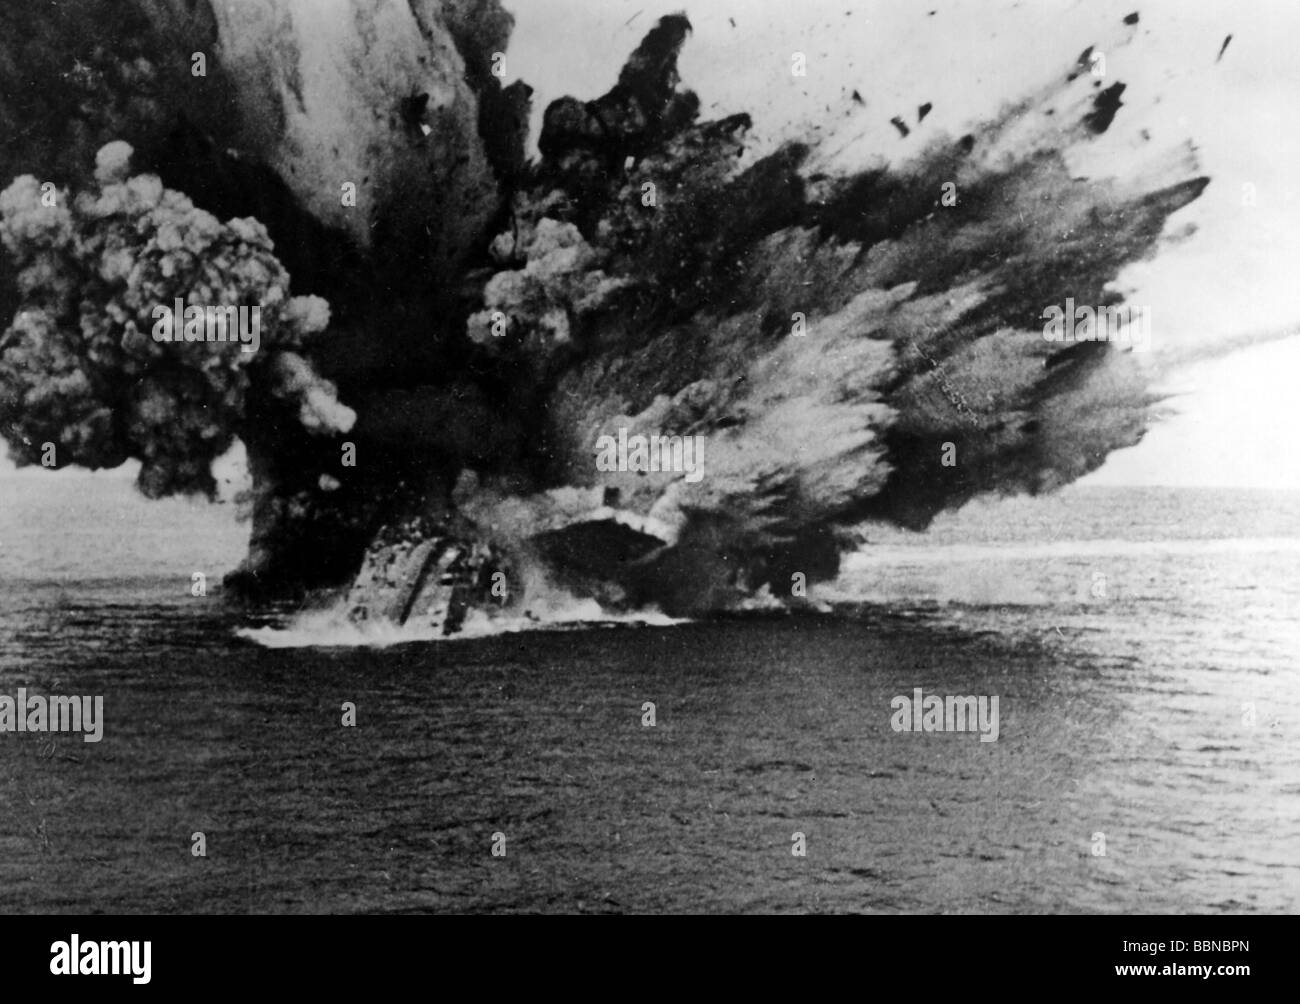 Events Second World War Wwii Naval Warfare British